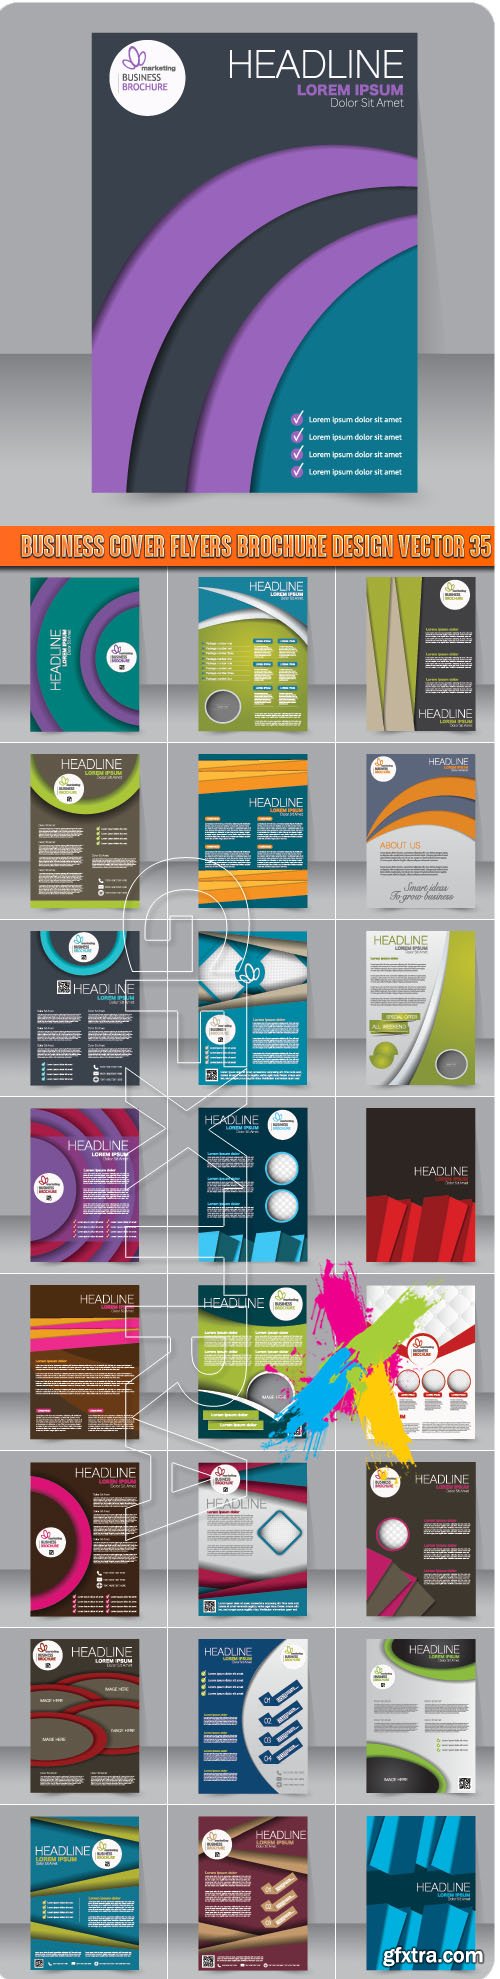 Business cover flyers brochure design vector 35